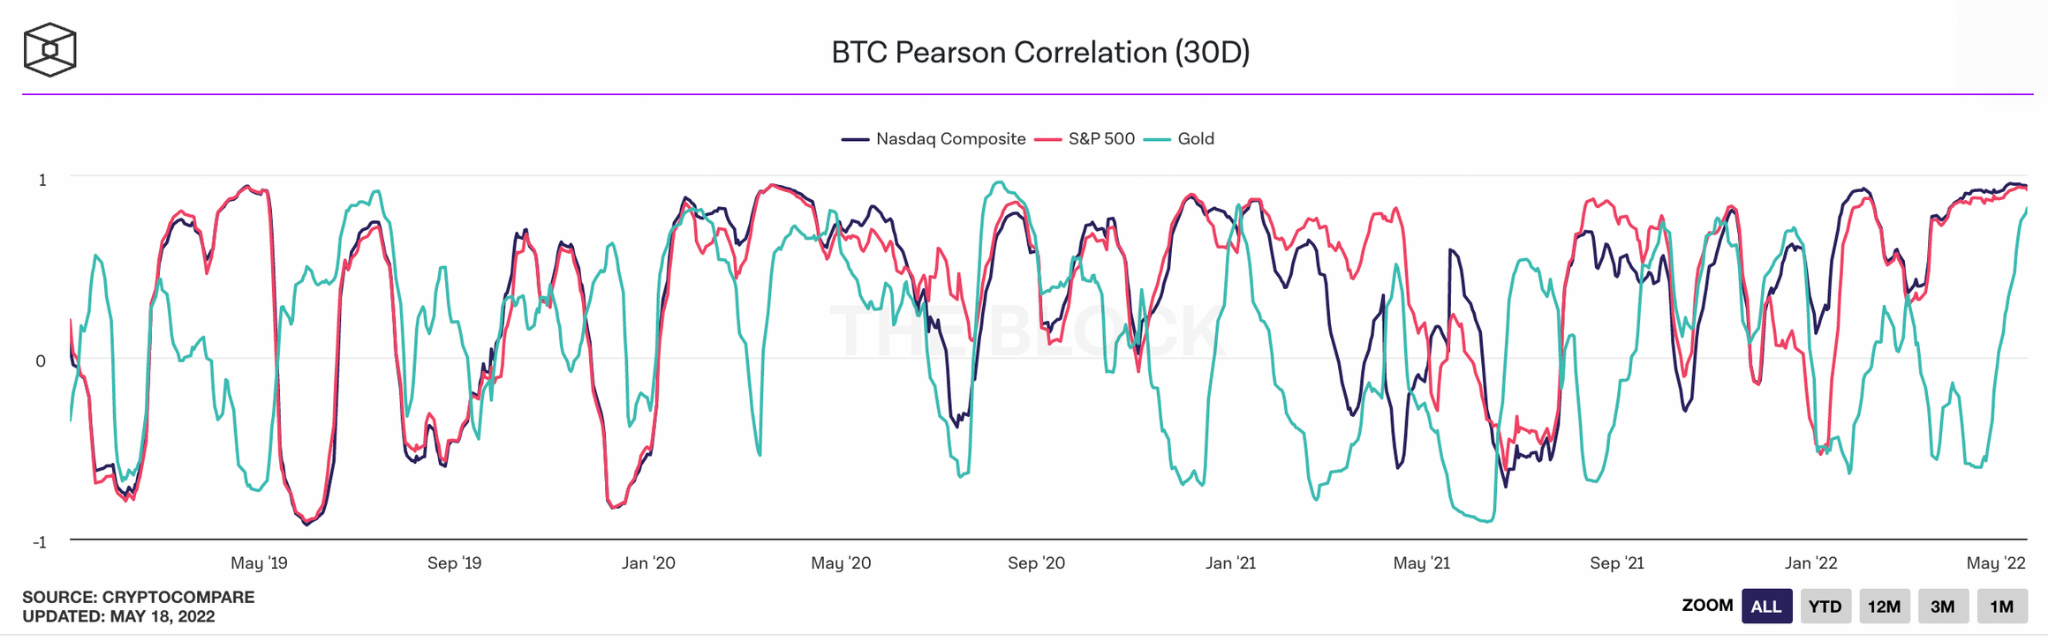 BTC Pearson Correlation.png (643 KB)